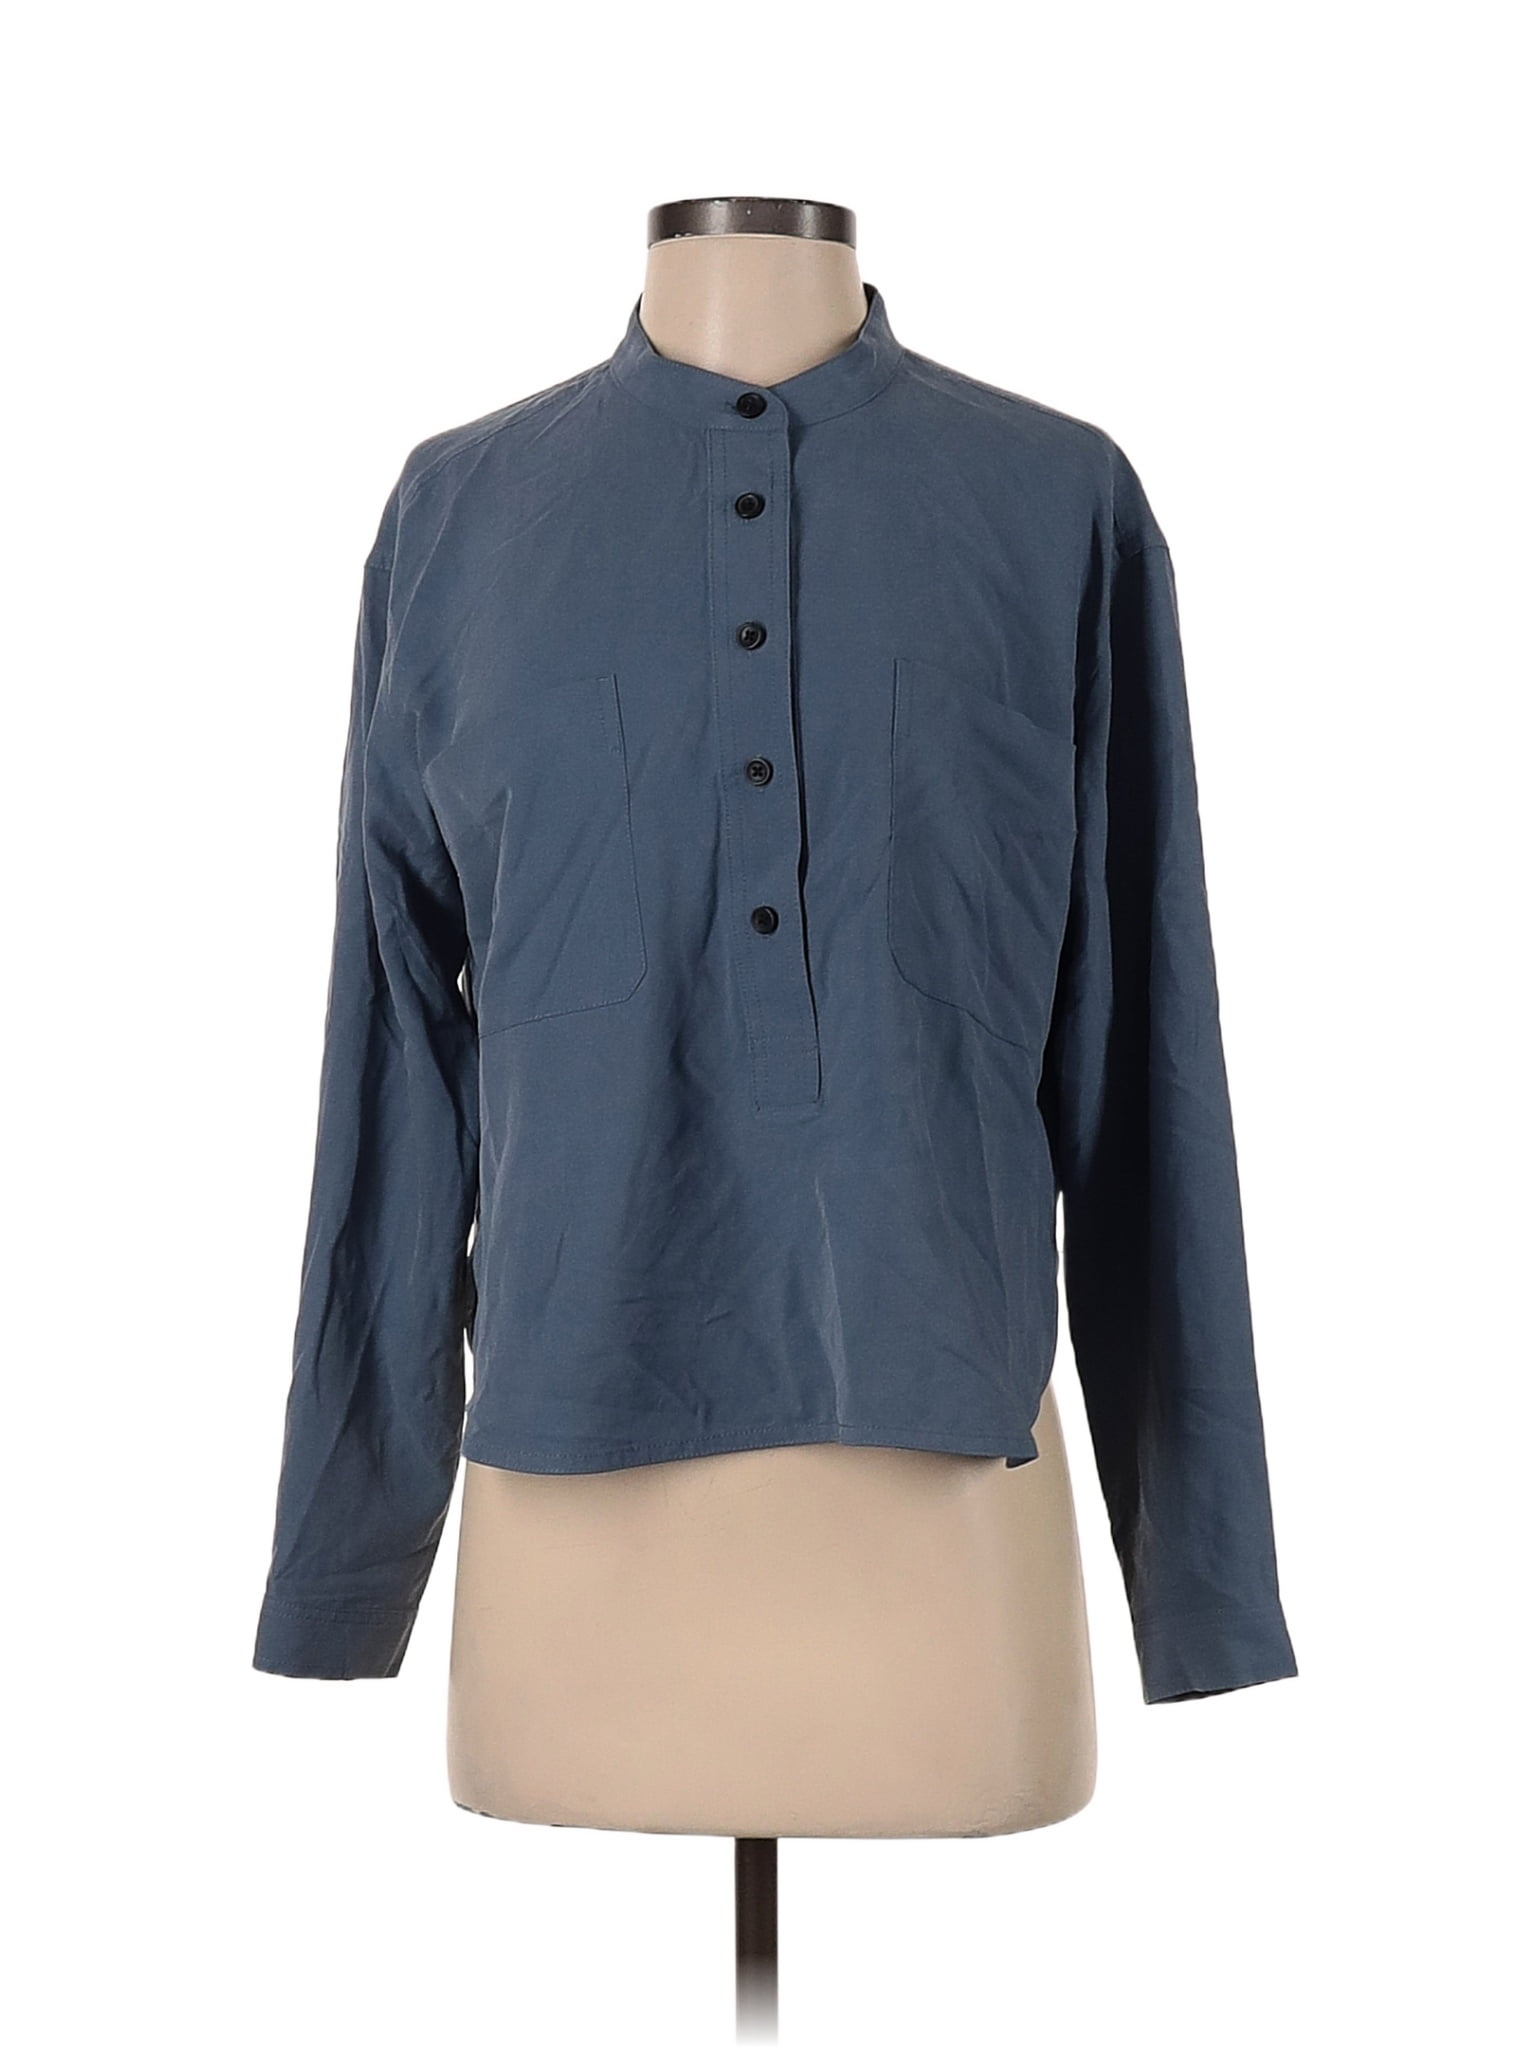 Everlane 100% Silk Blue Long Sleeve Silk Top Size 00 - 57% off | thredUP